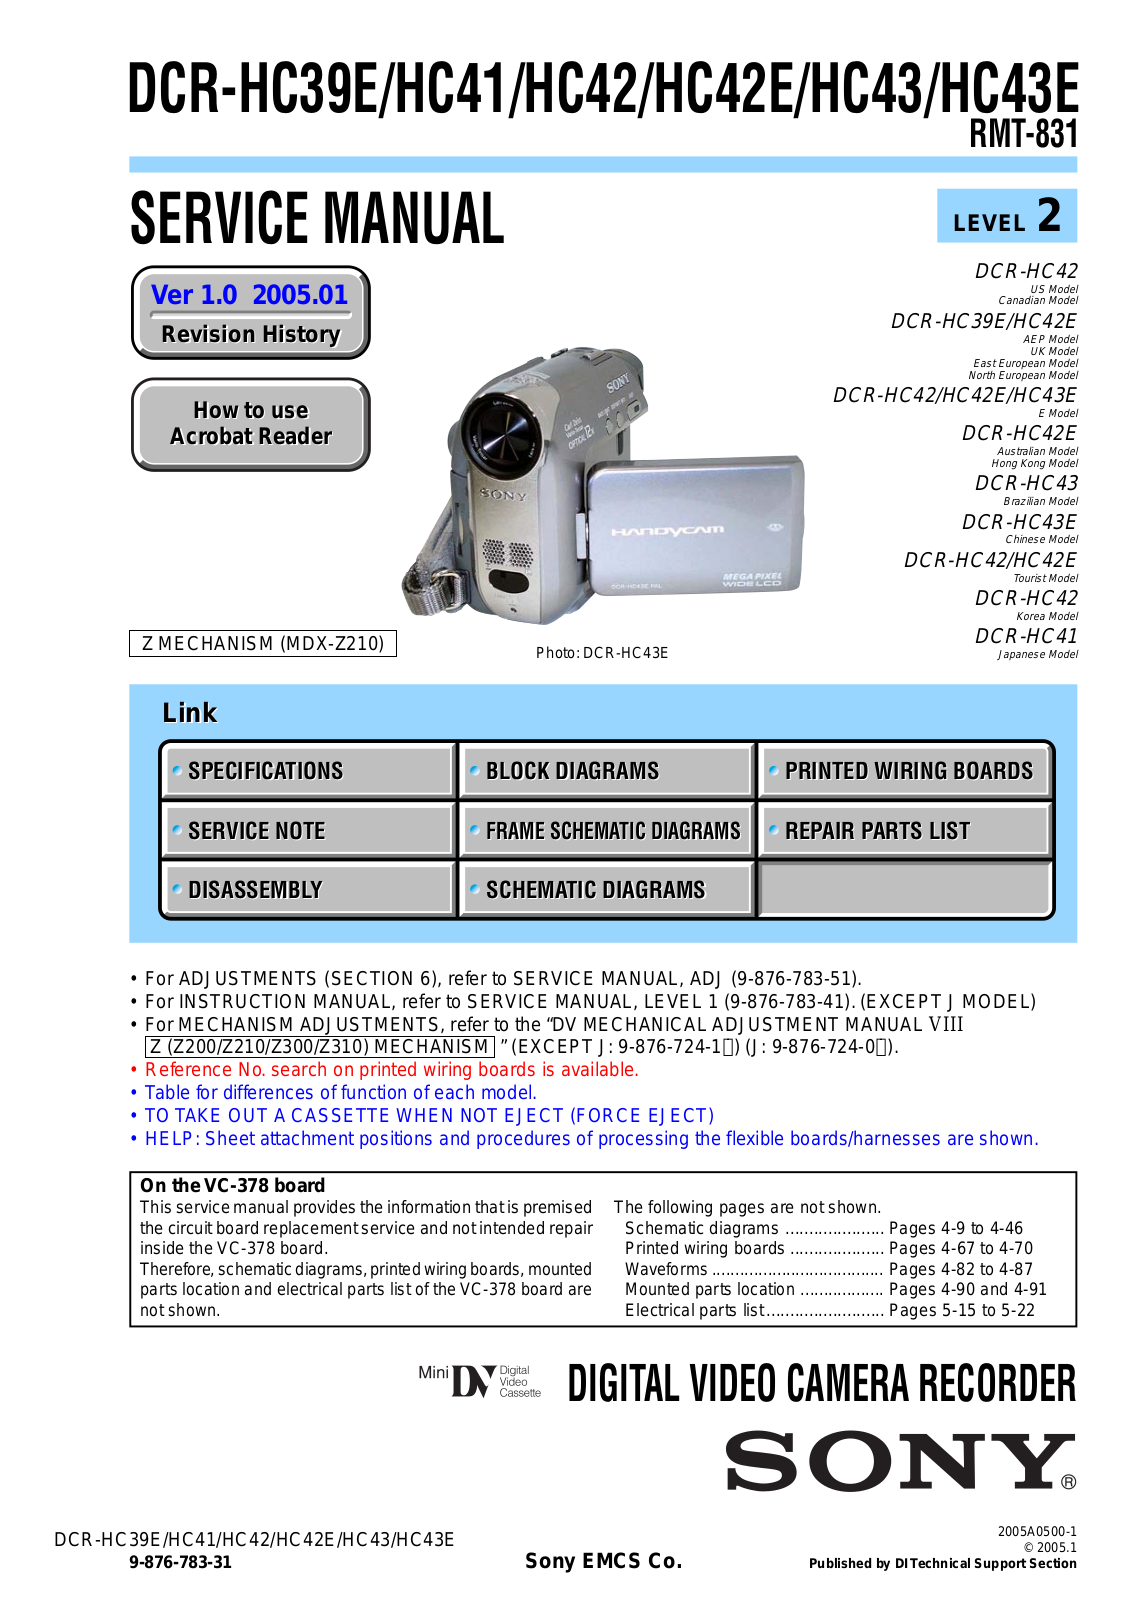 Sony DCR-HC39E, DCR-HC41, DCR-HC42 Service Manual